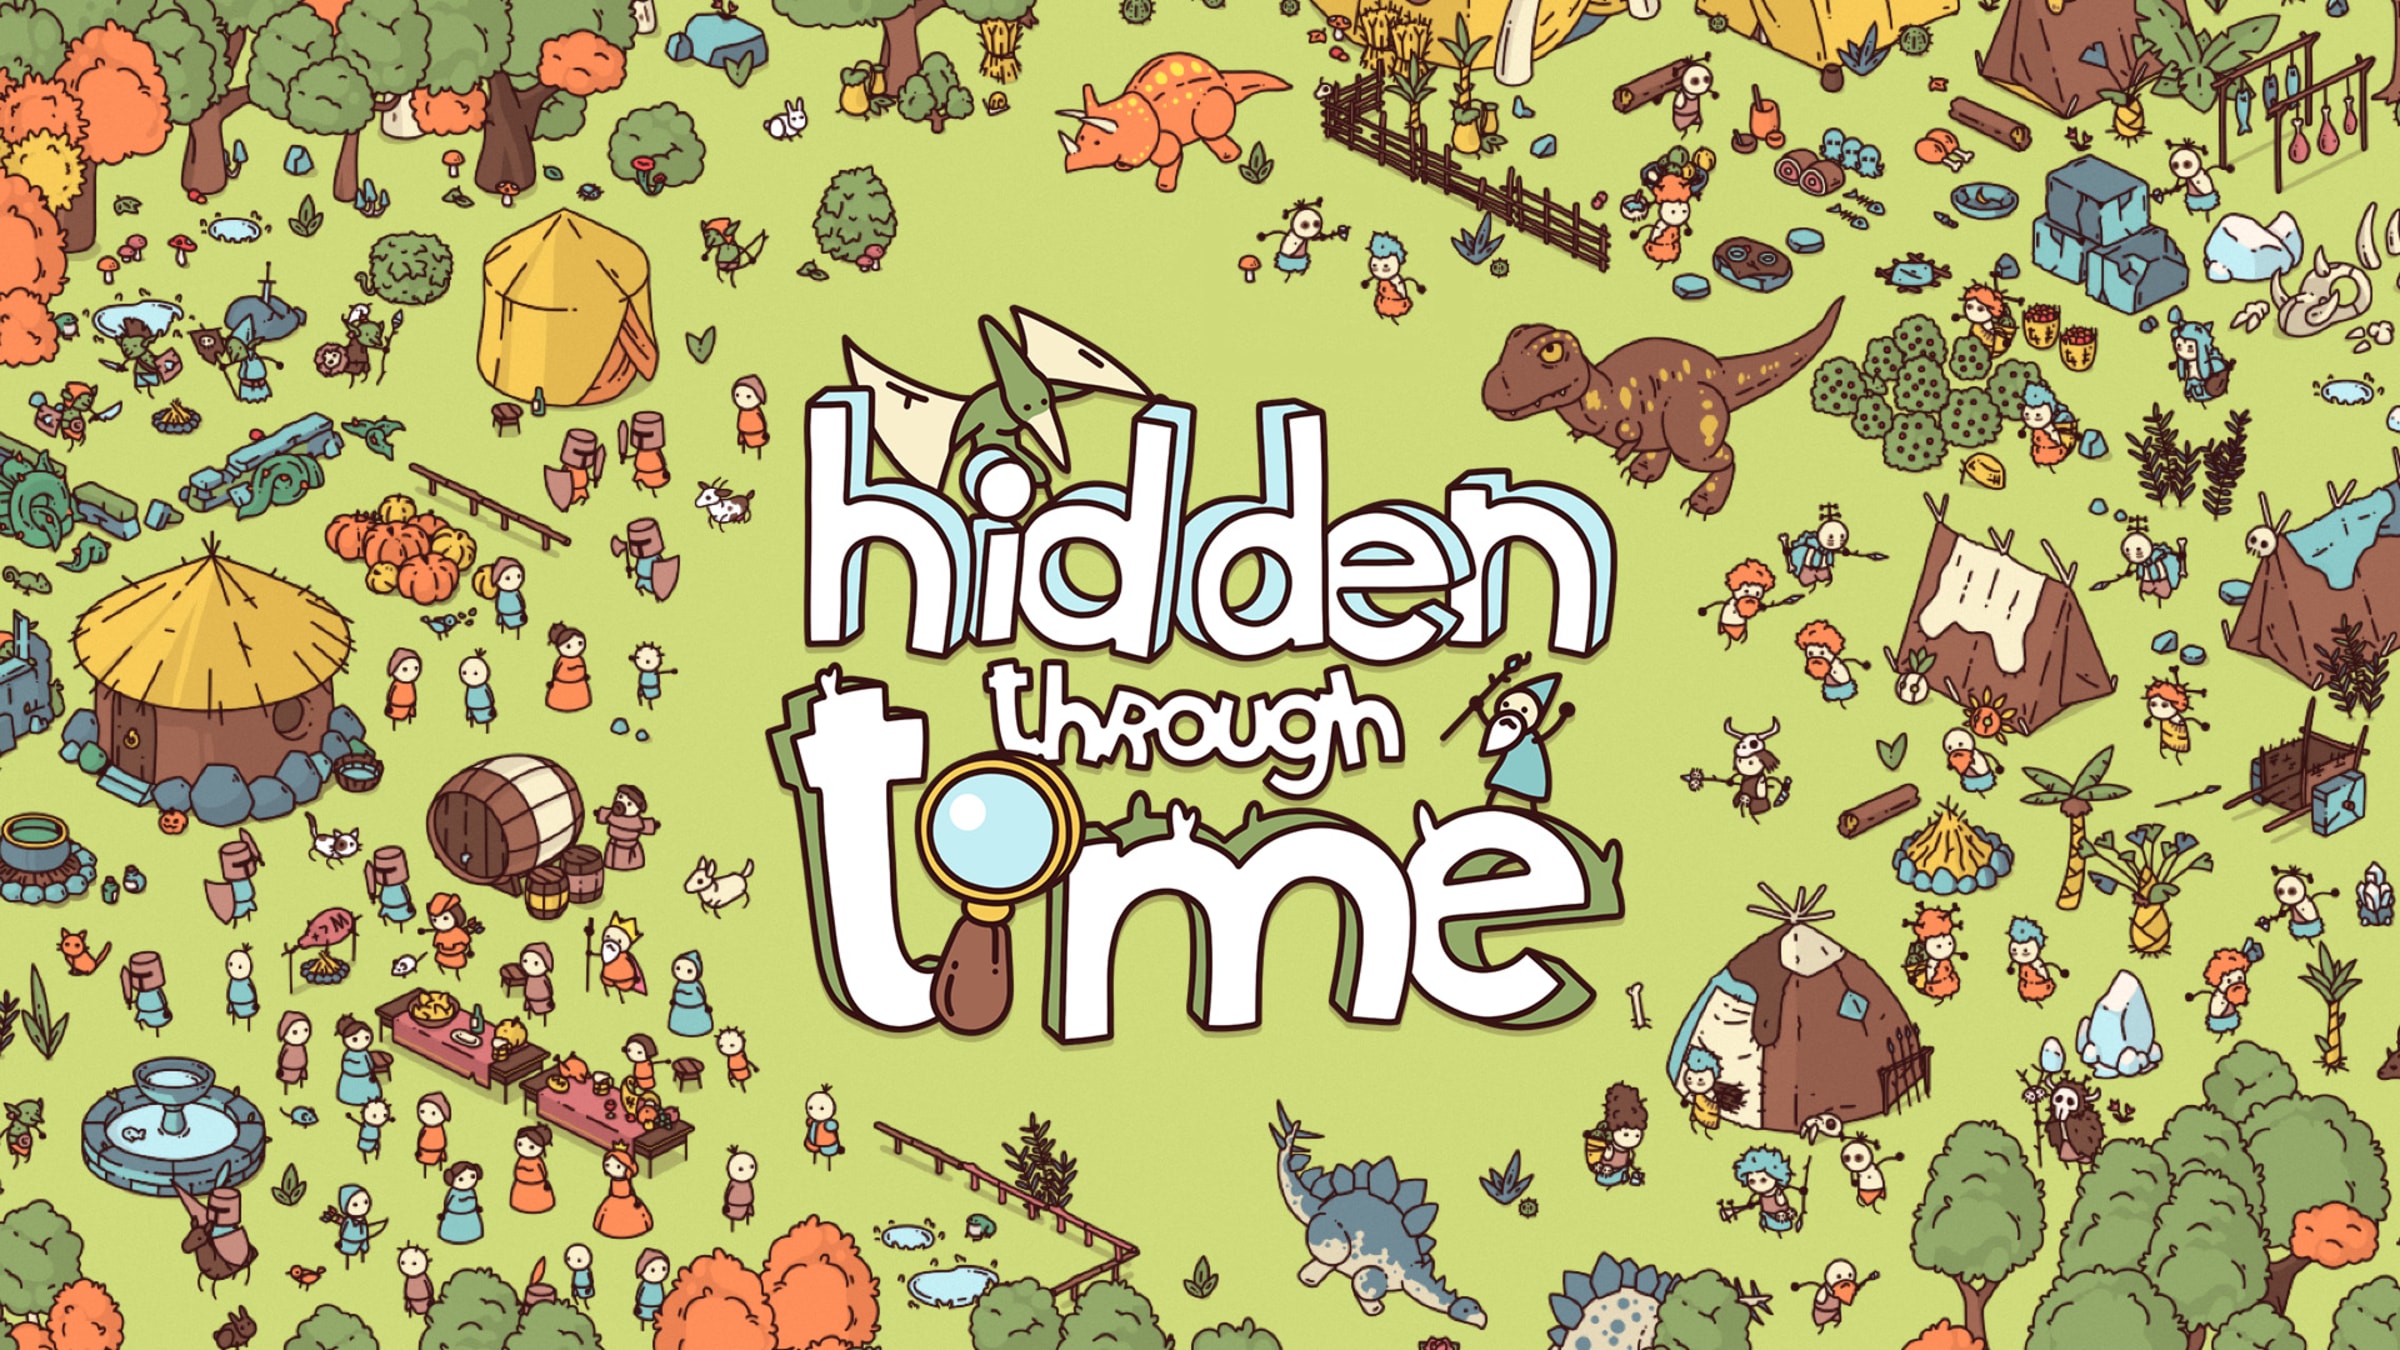 Hidden Through Time for Nintendo Switch - Nintendo Official Site